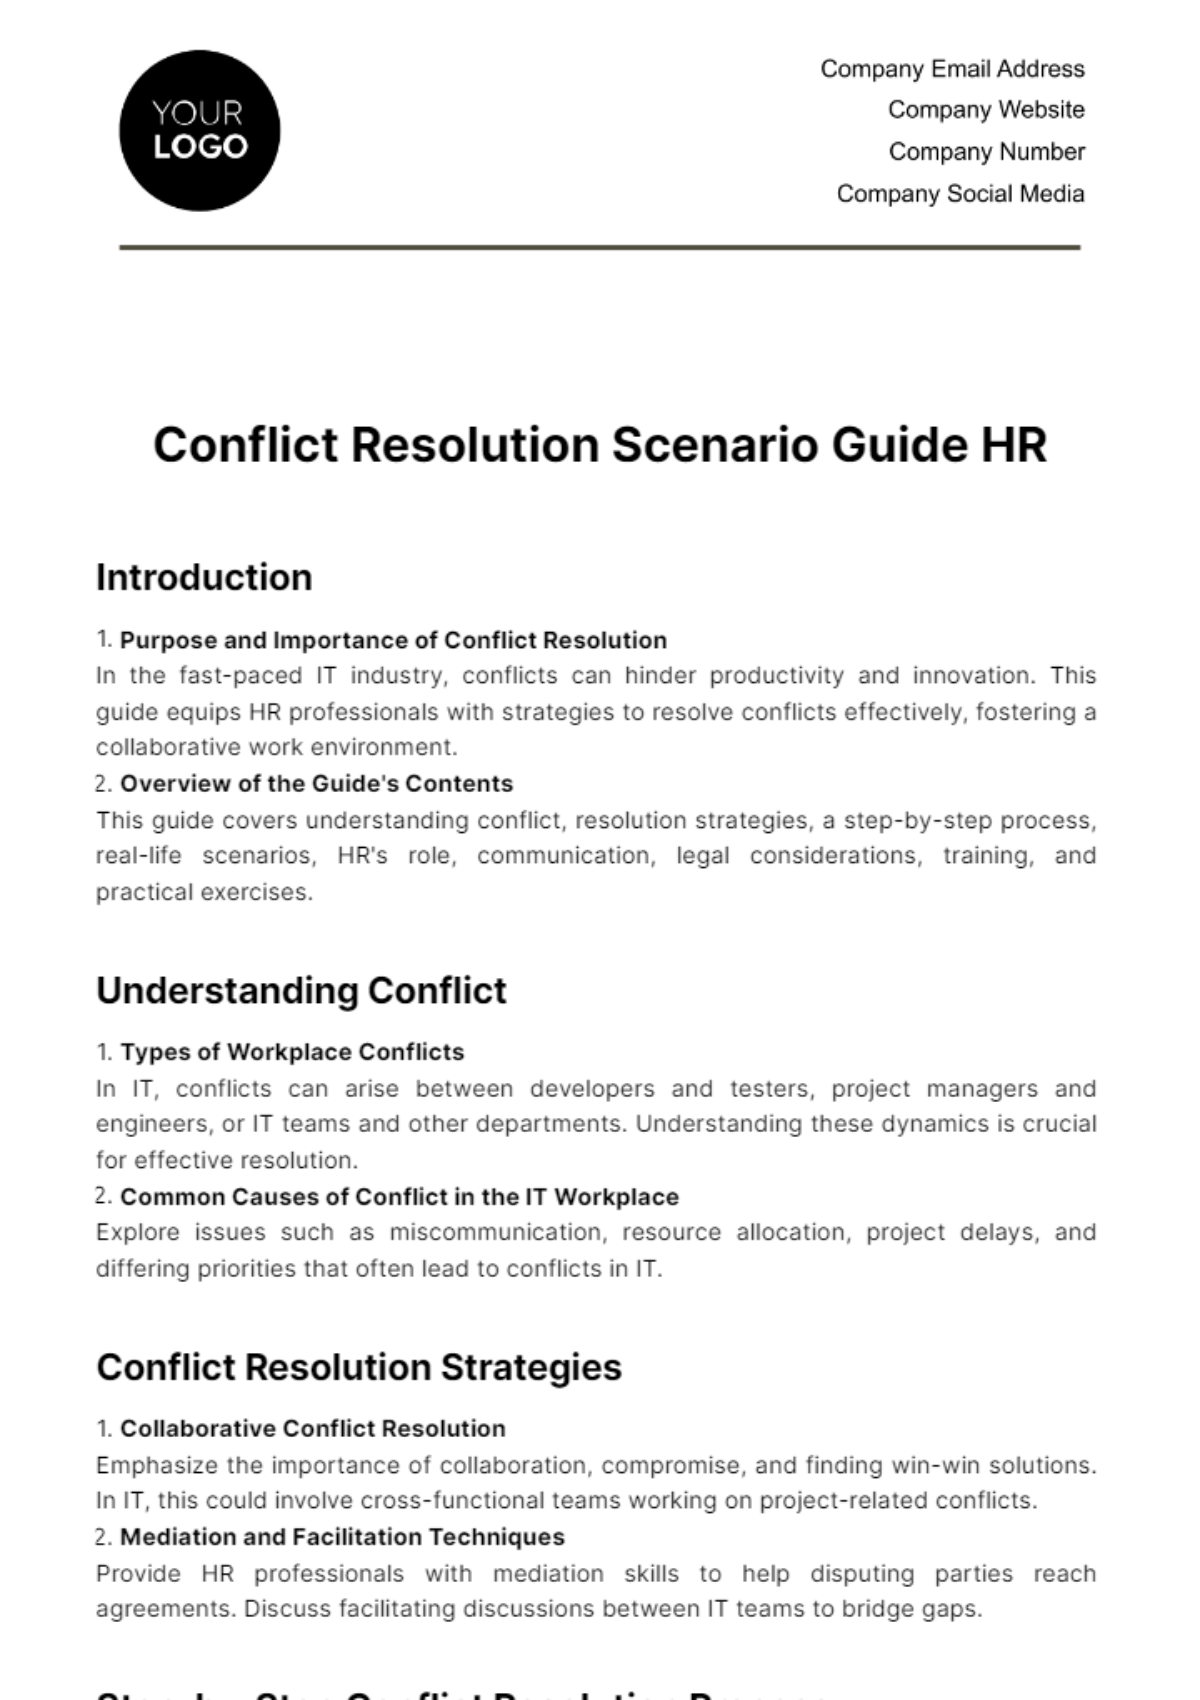 Free Conflict Resolution Scenario Guide HR Template